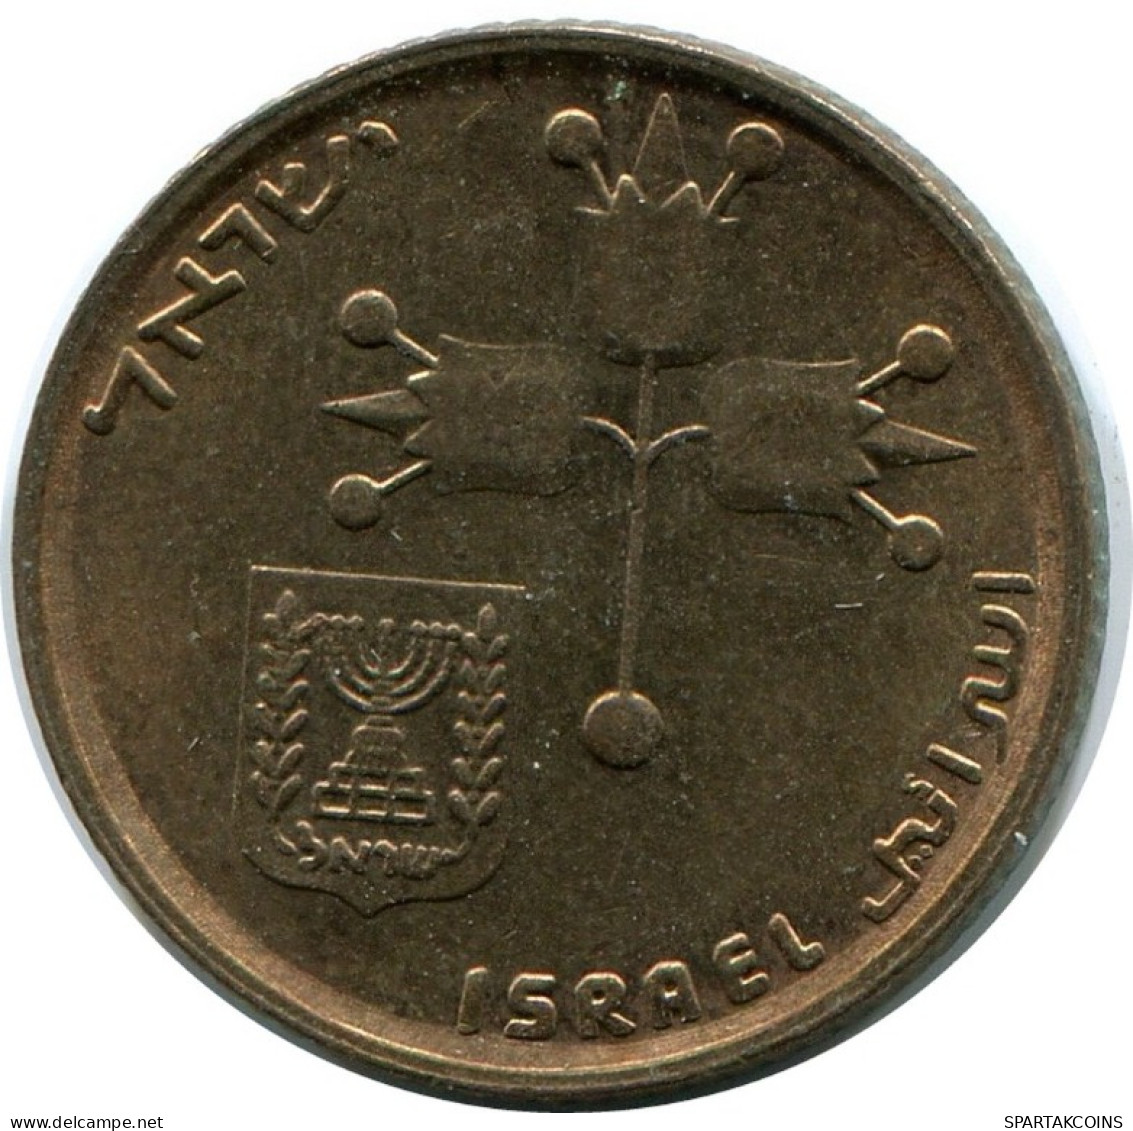 10 NEW AGOROT 1982 ISRAEL Coin #AK333.U.A - Israel